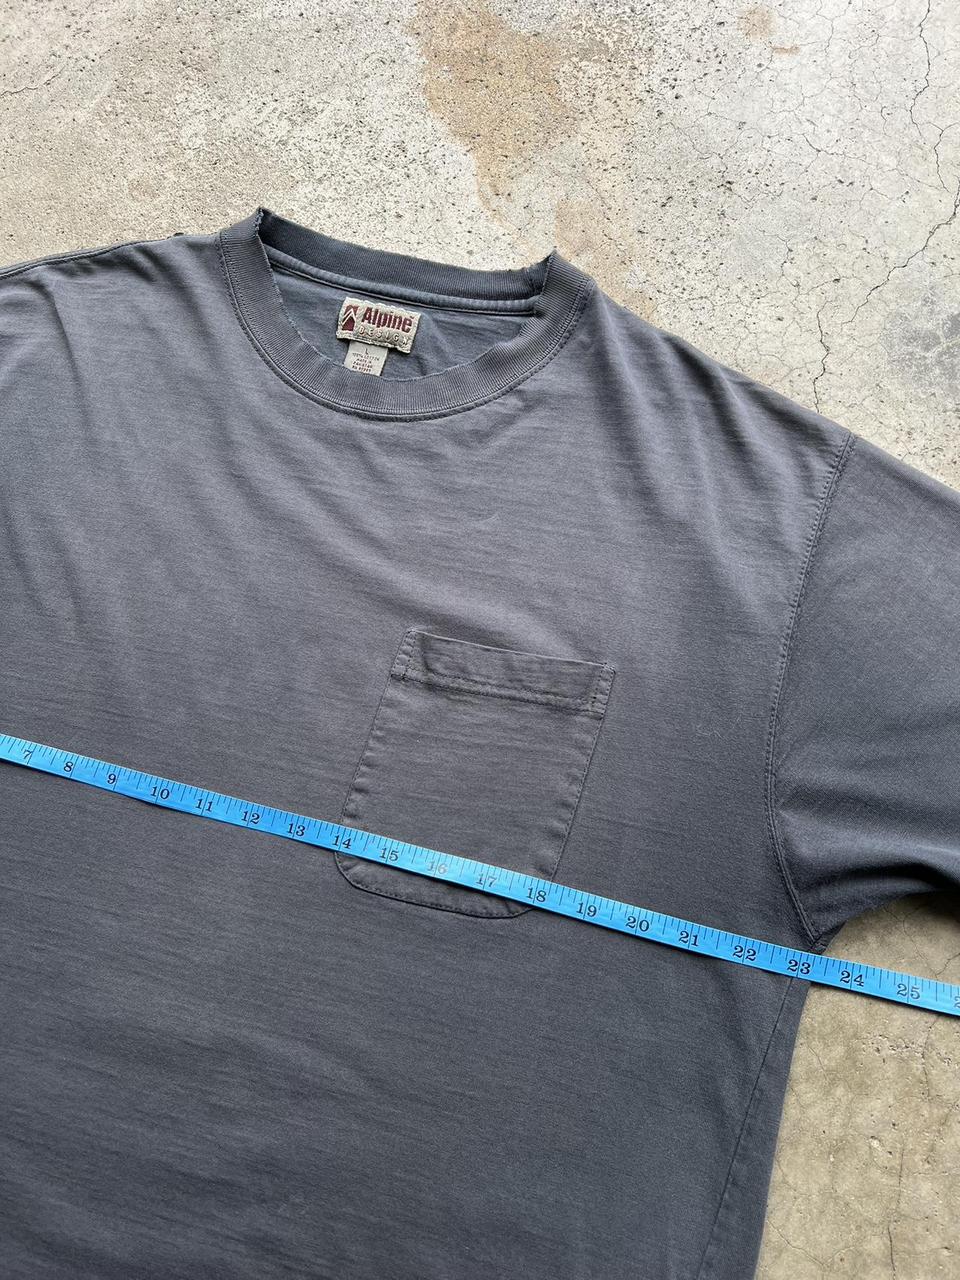 Alpine Design Men's Black T-shirt (4)